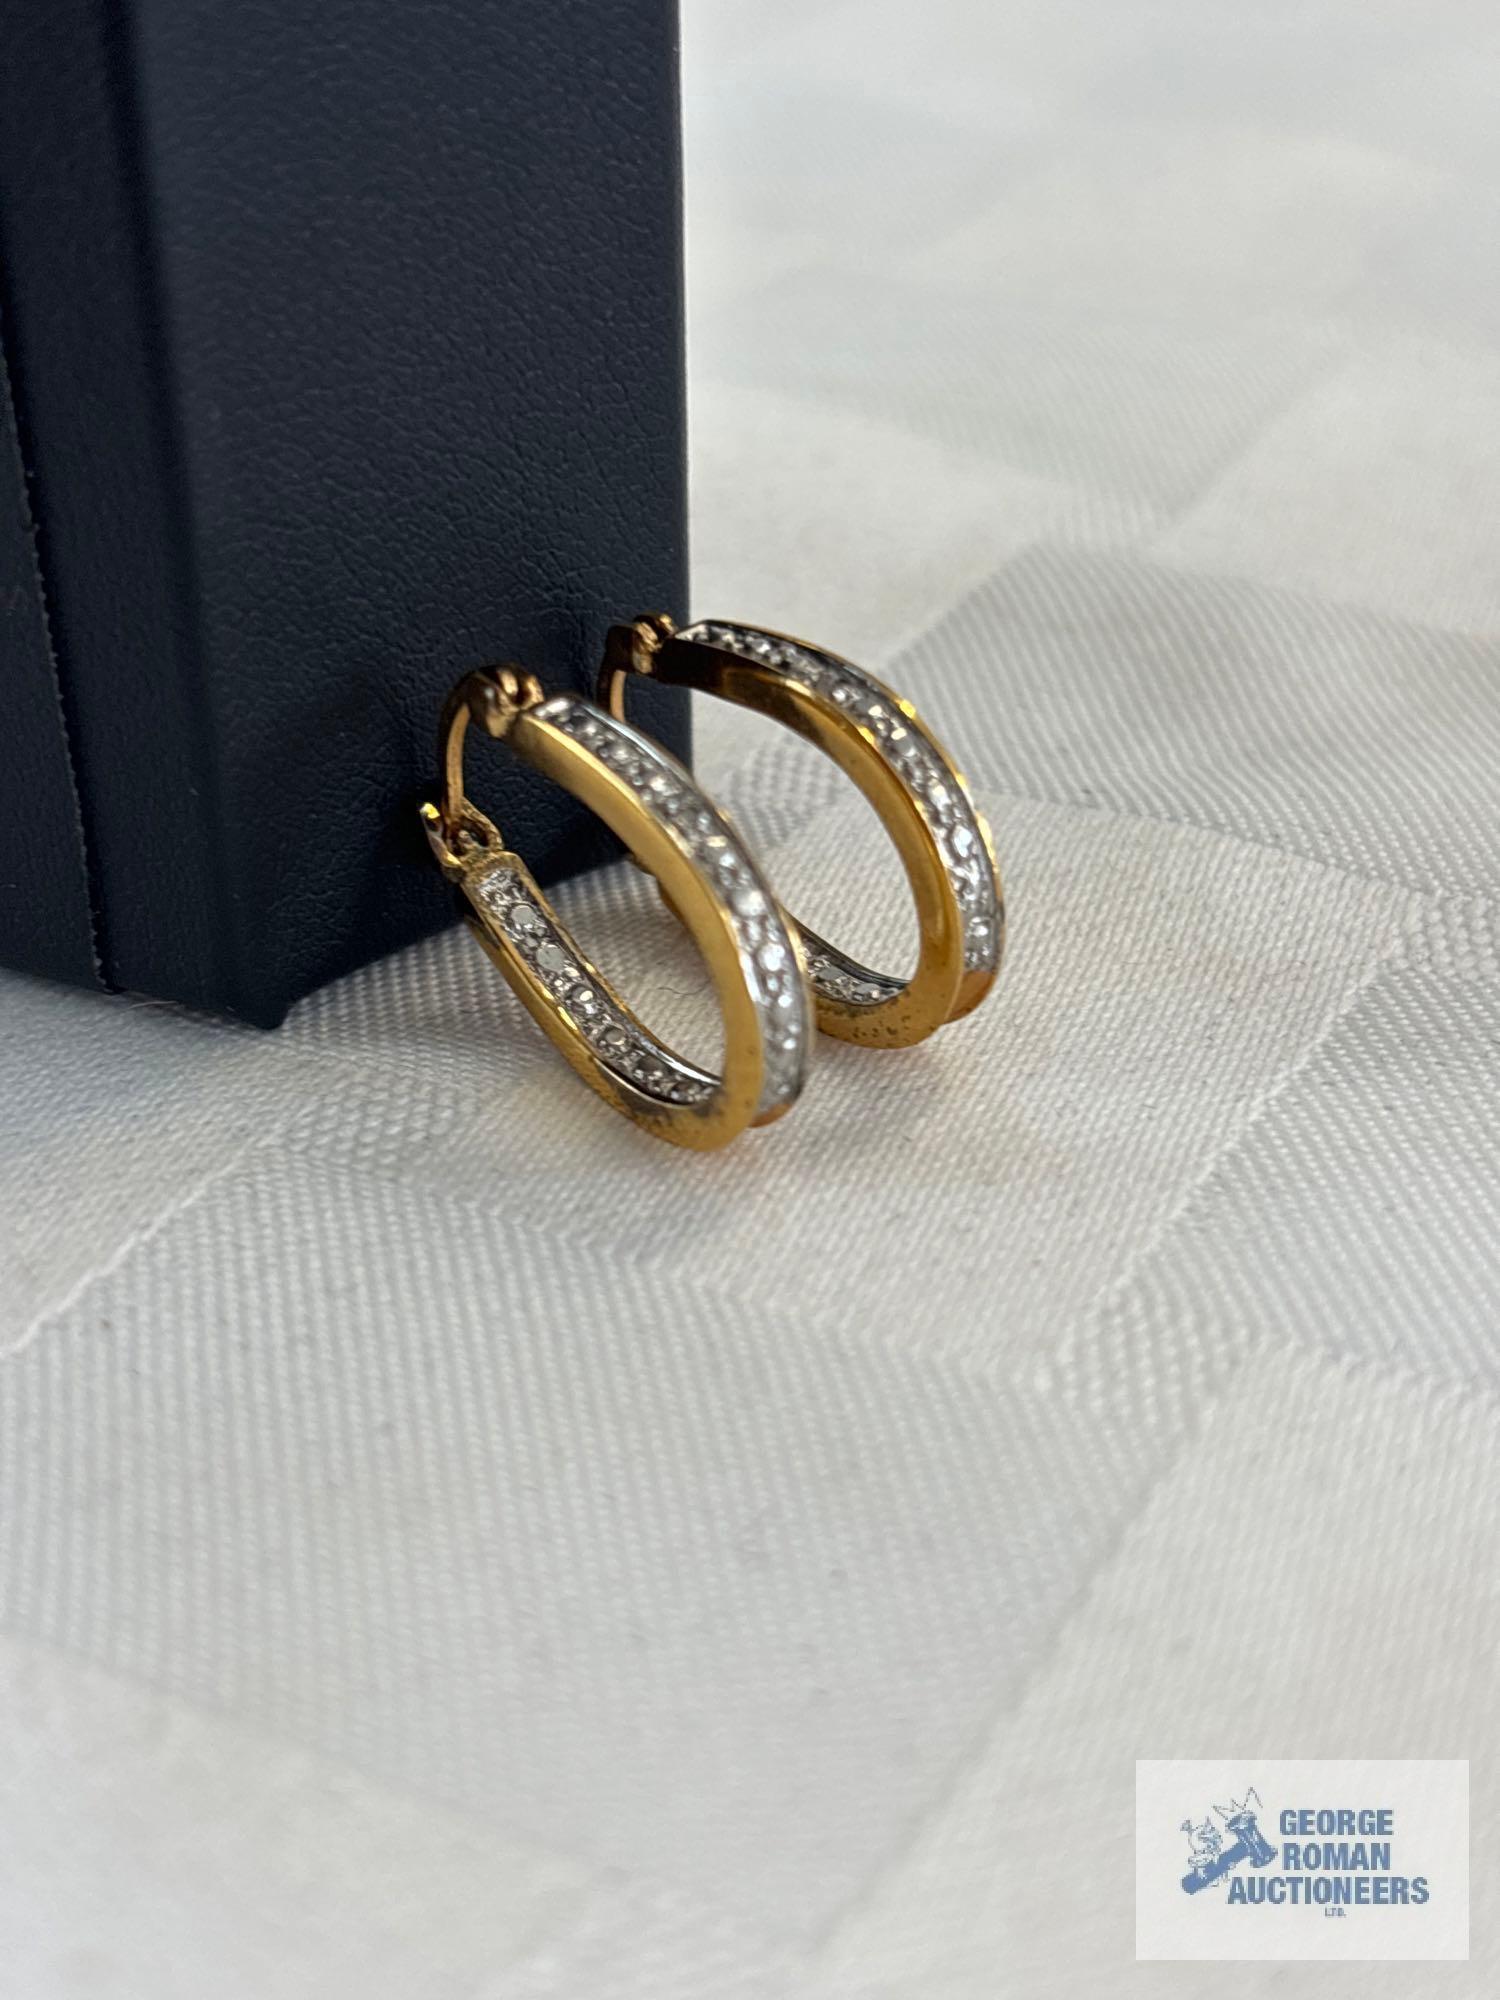 Pair of gold colored hoop earrings, marked 925